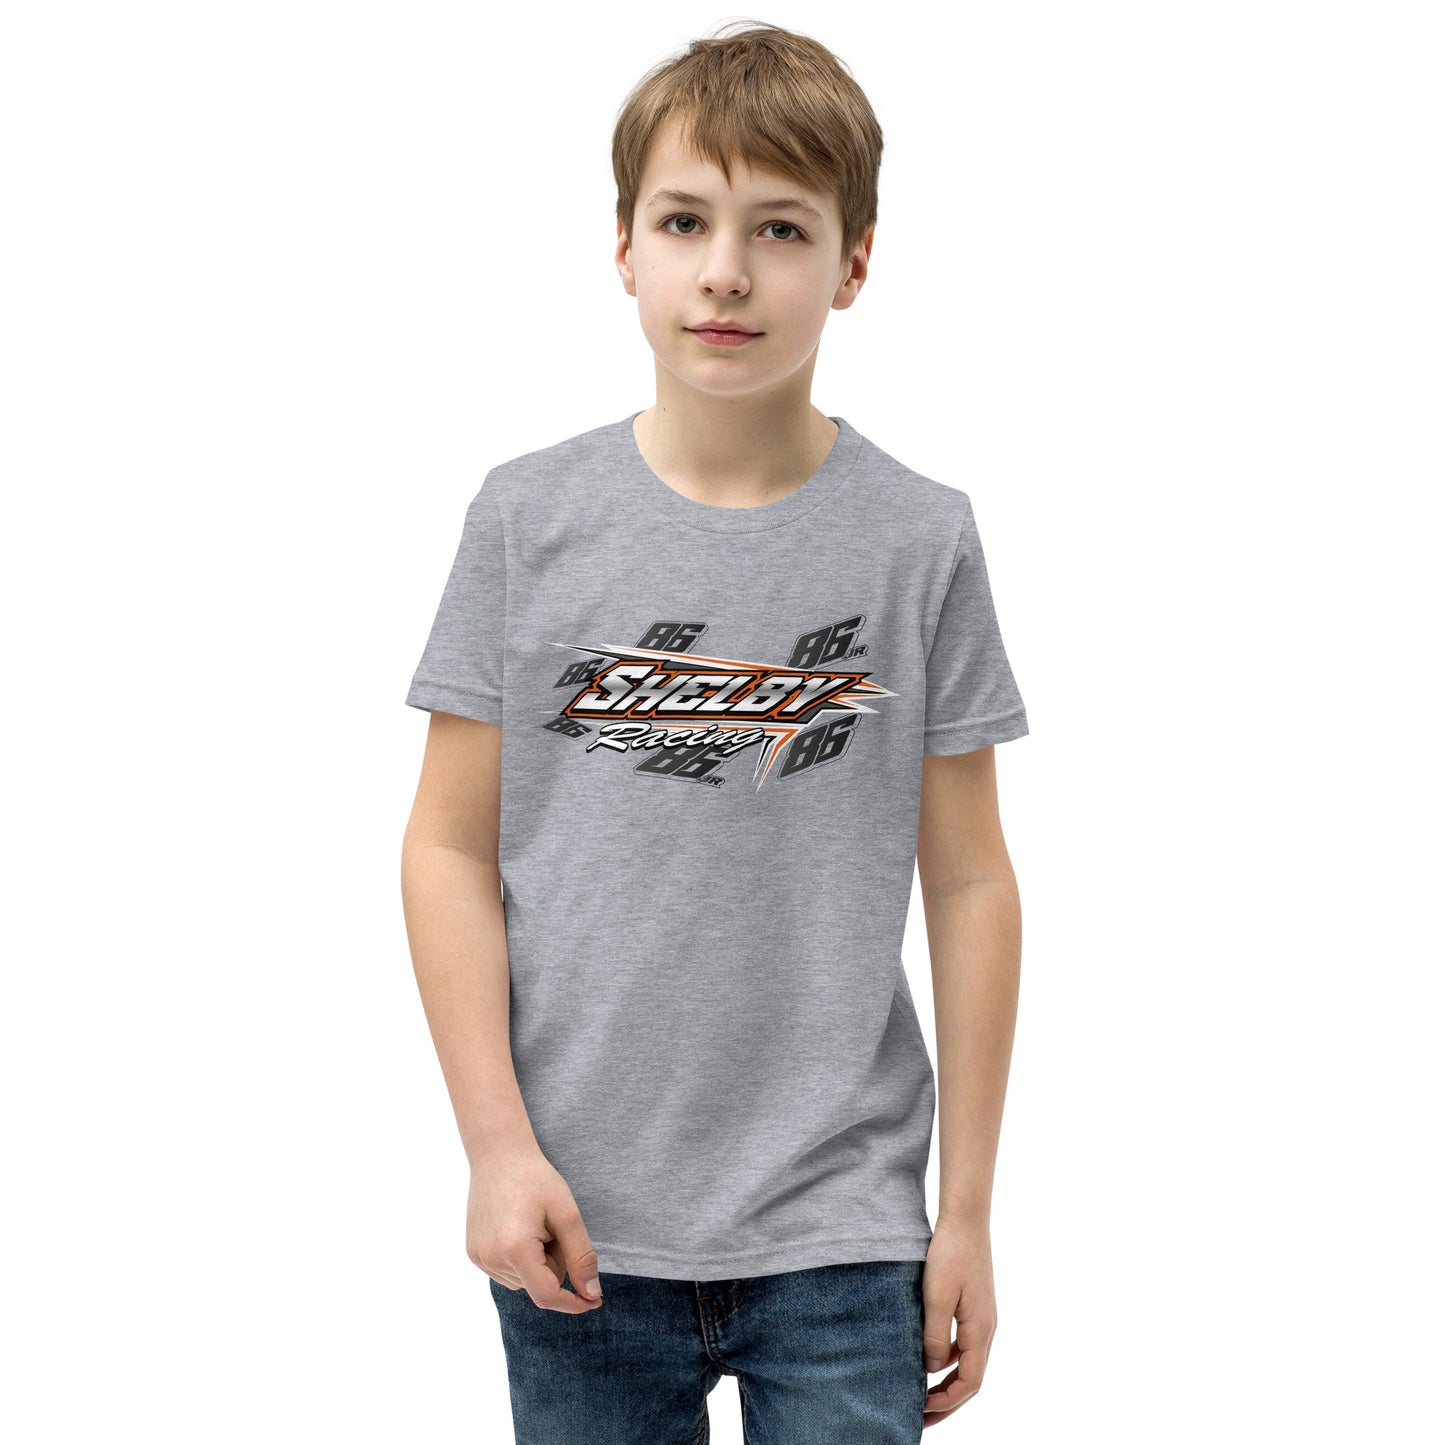 Shelby Racing Kids T-Shirt